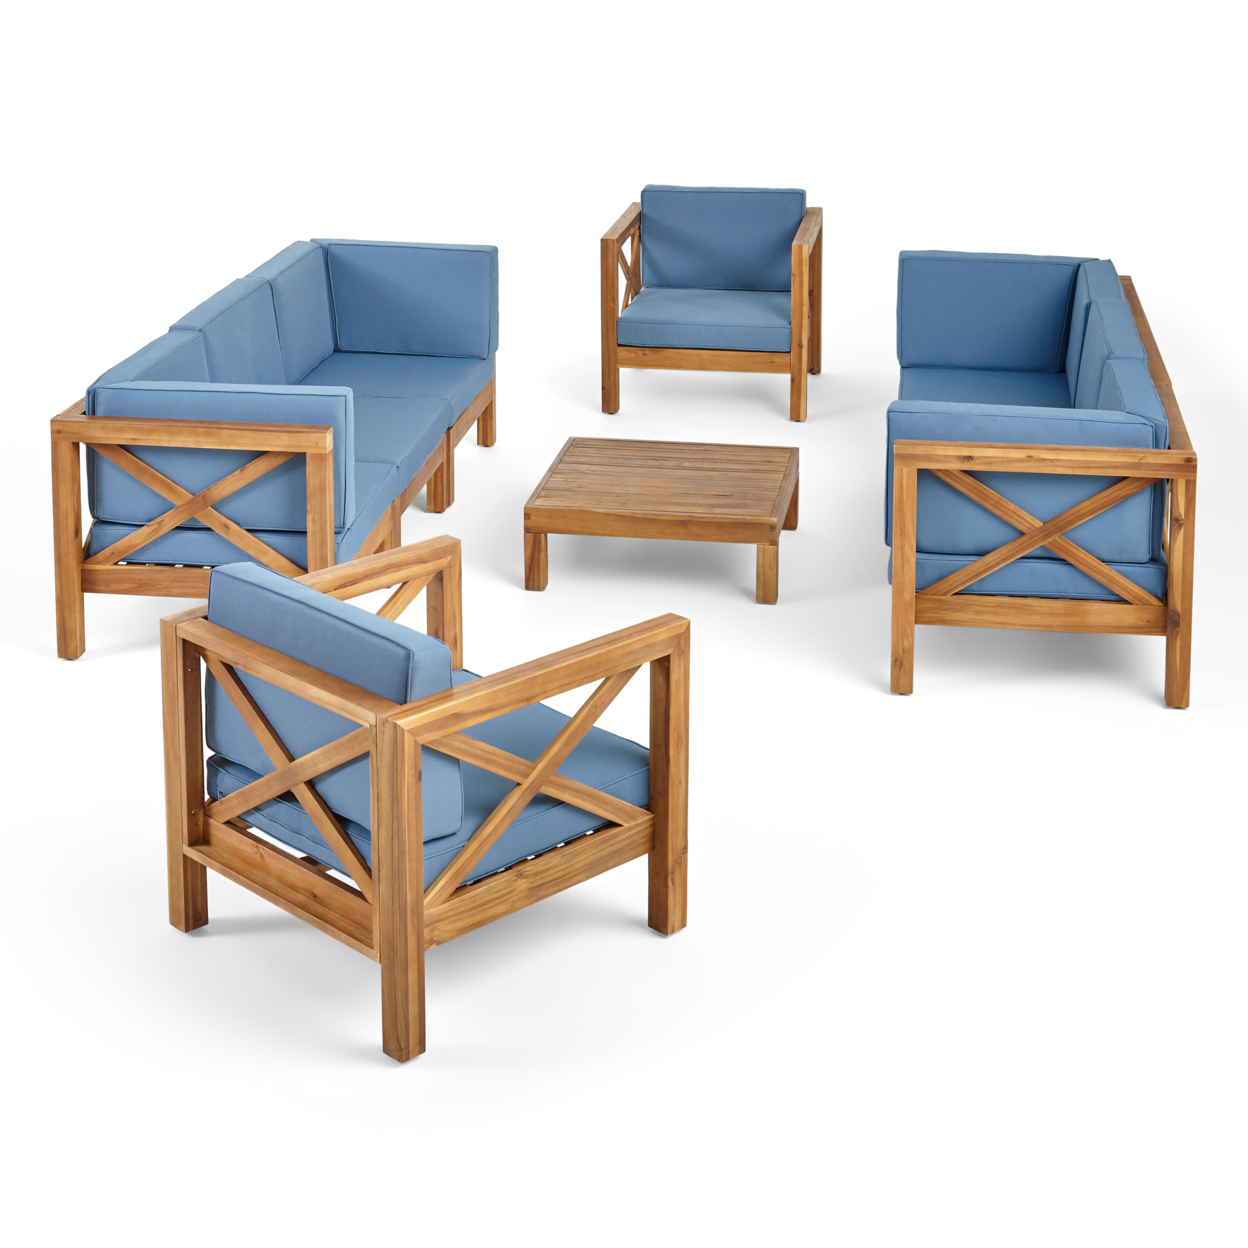 Morgan Outdoor 8 Seater Acacia Wood Sofa And Club Chair Set - Teak Finish + Red